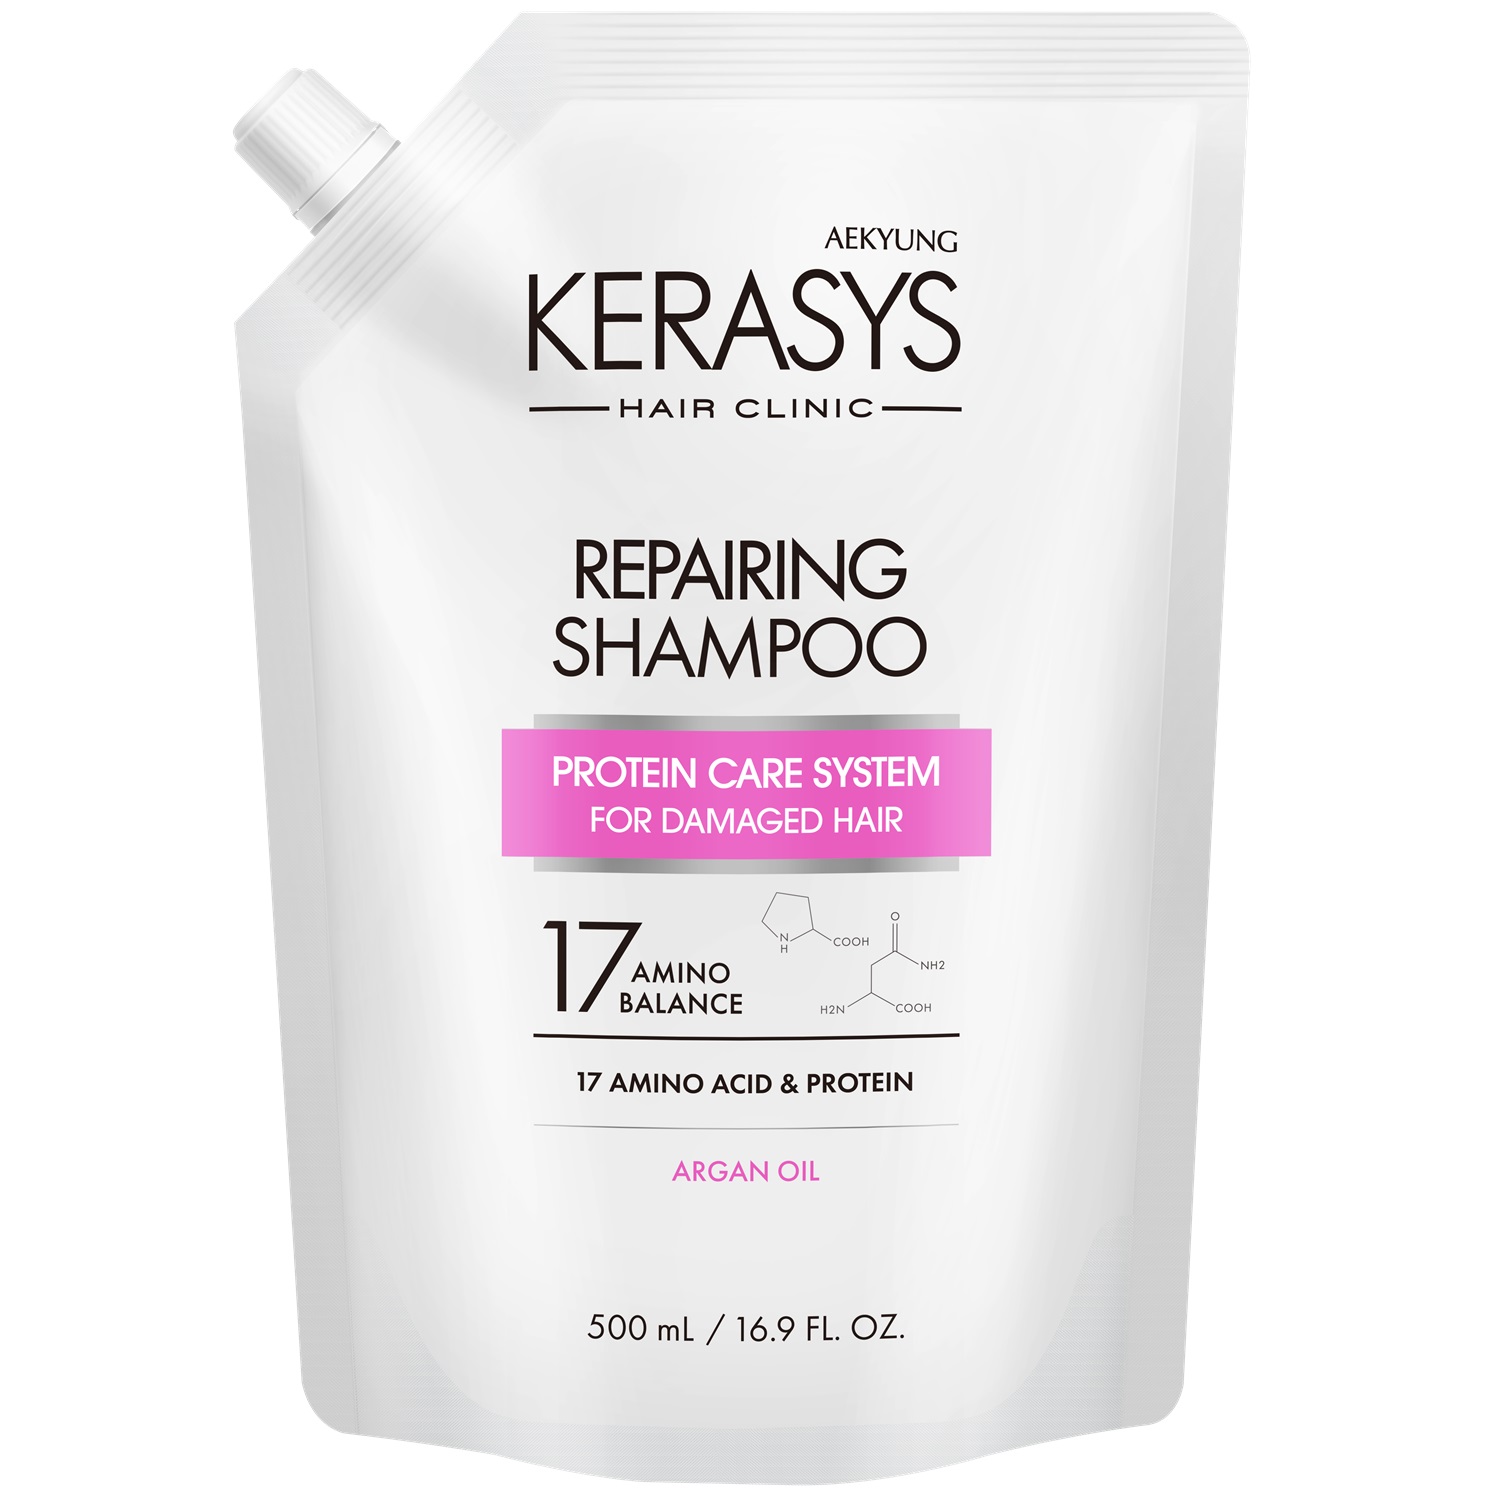 Kerasys Шампунь для волос восстанавливающий, запасной блок 500 мл (Kerasys, Hair Clinic) шампунь kerasys элеганс запасной блок 500 мл